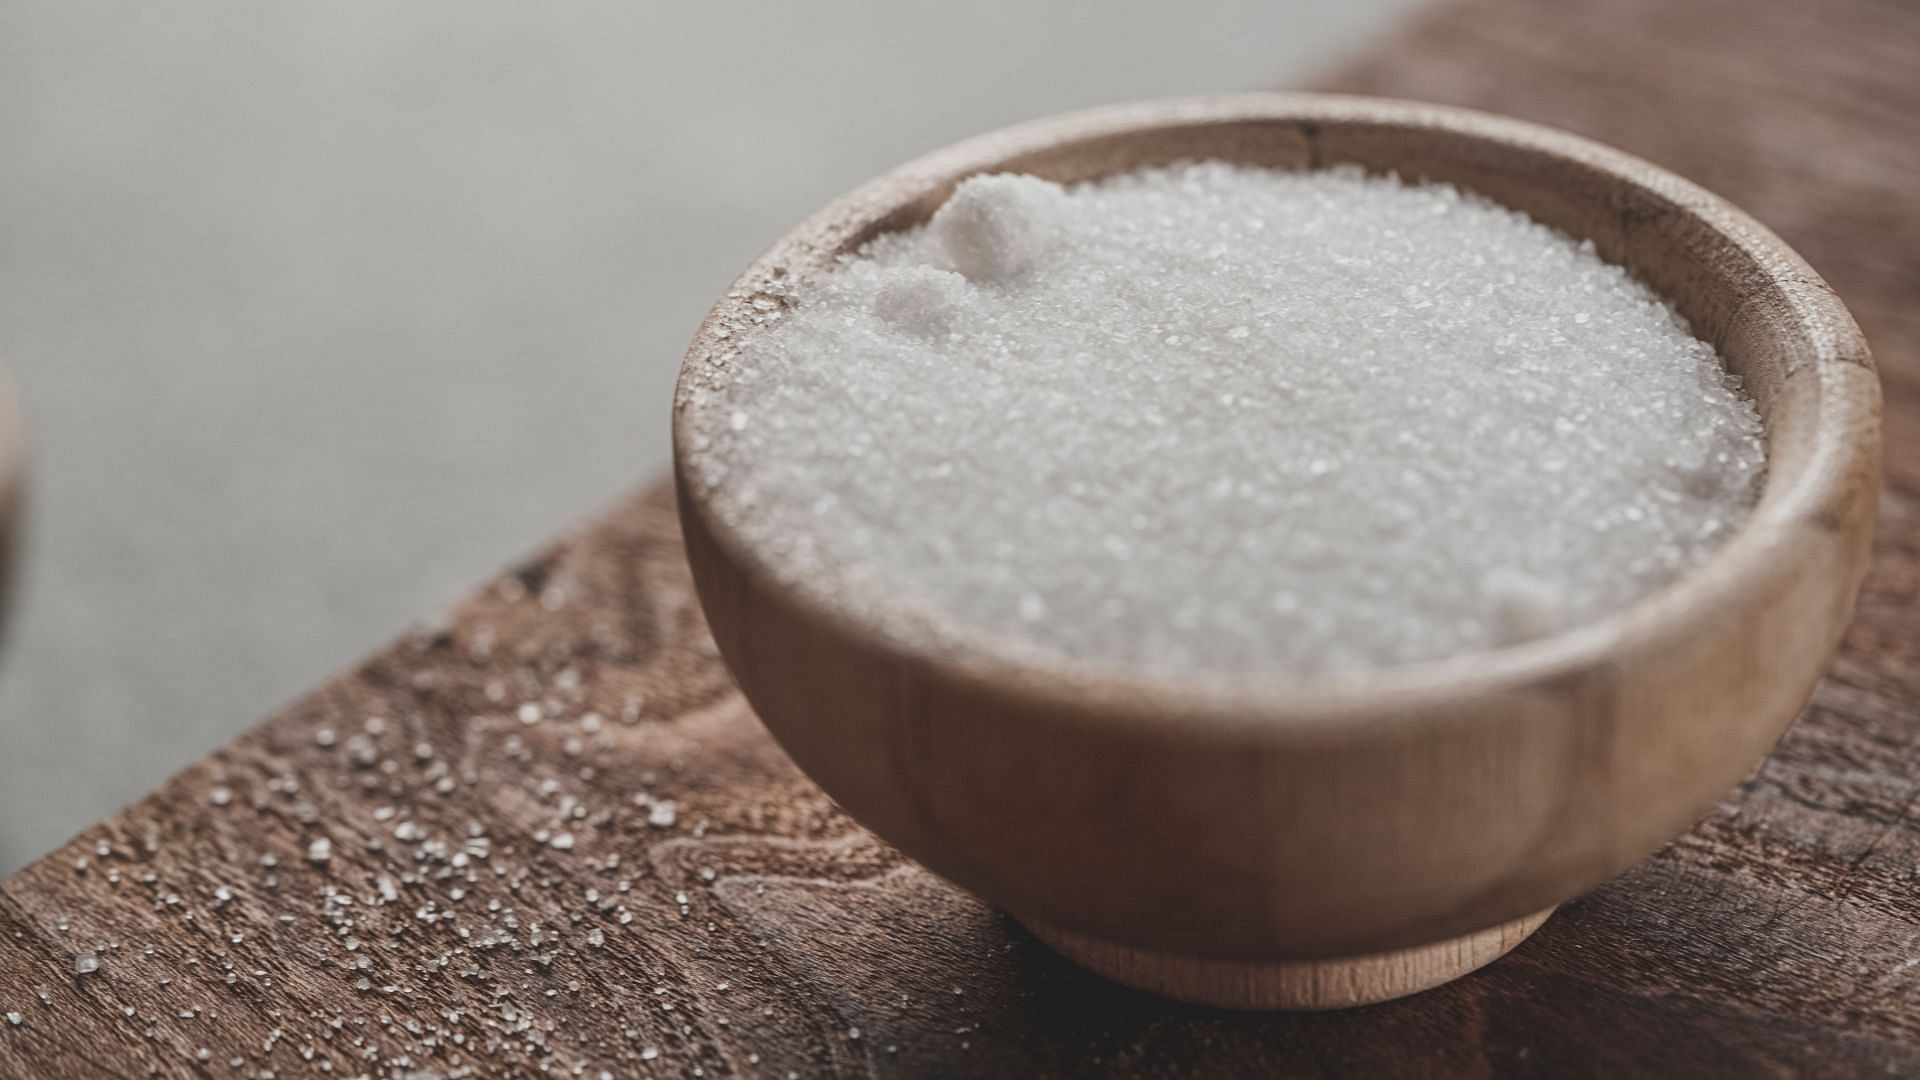 Refined sugar should be avoided in a diet for ADHD. (Image via Unsplash/Faran Raufi)